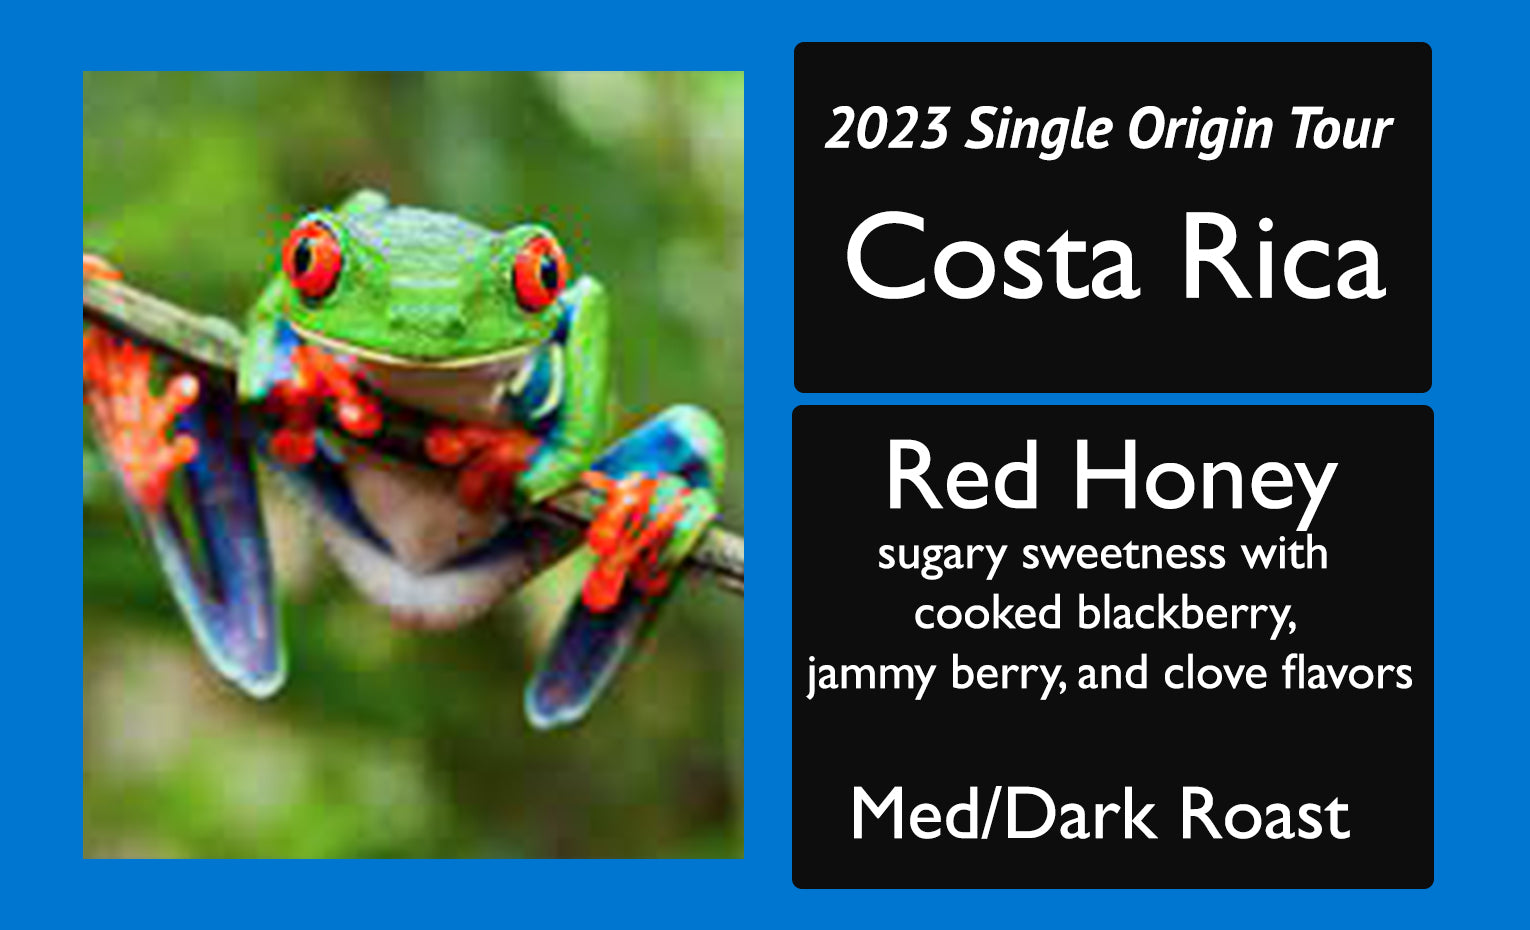 Costa Rica Red Honey 2023 Single Origin Tour Feature